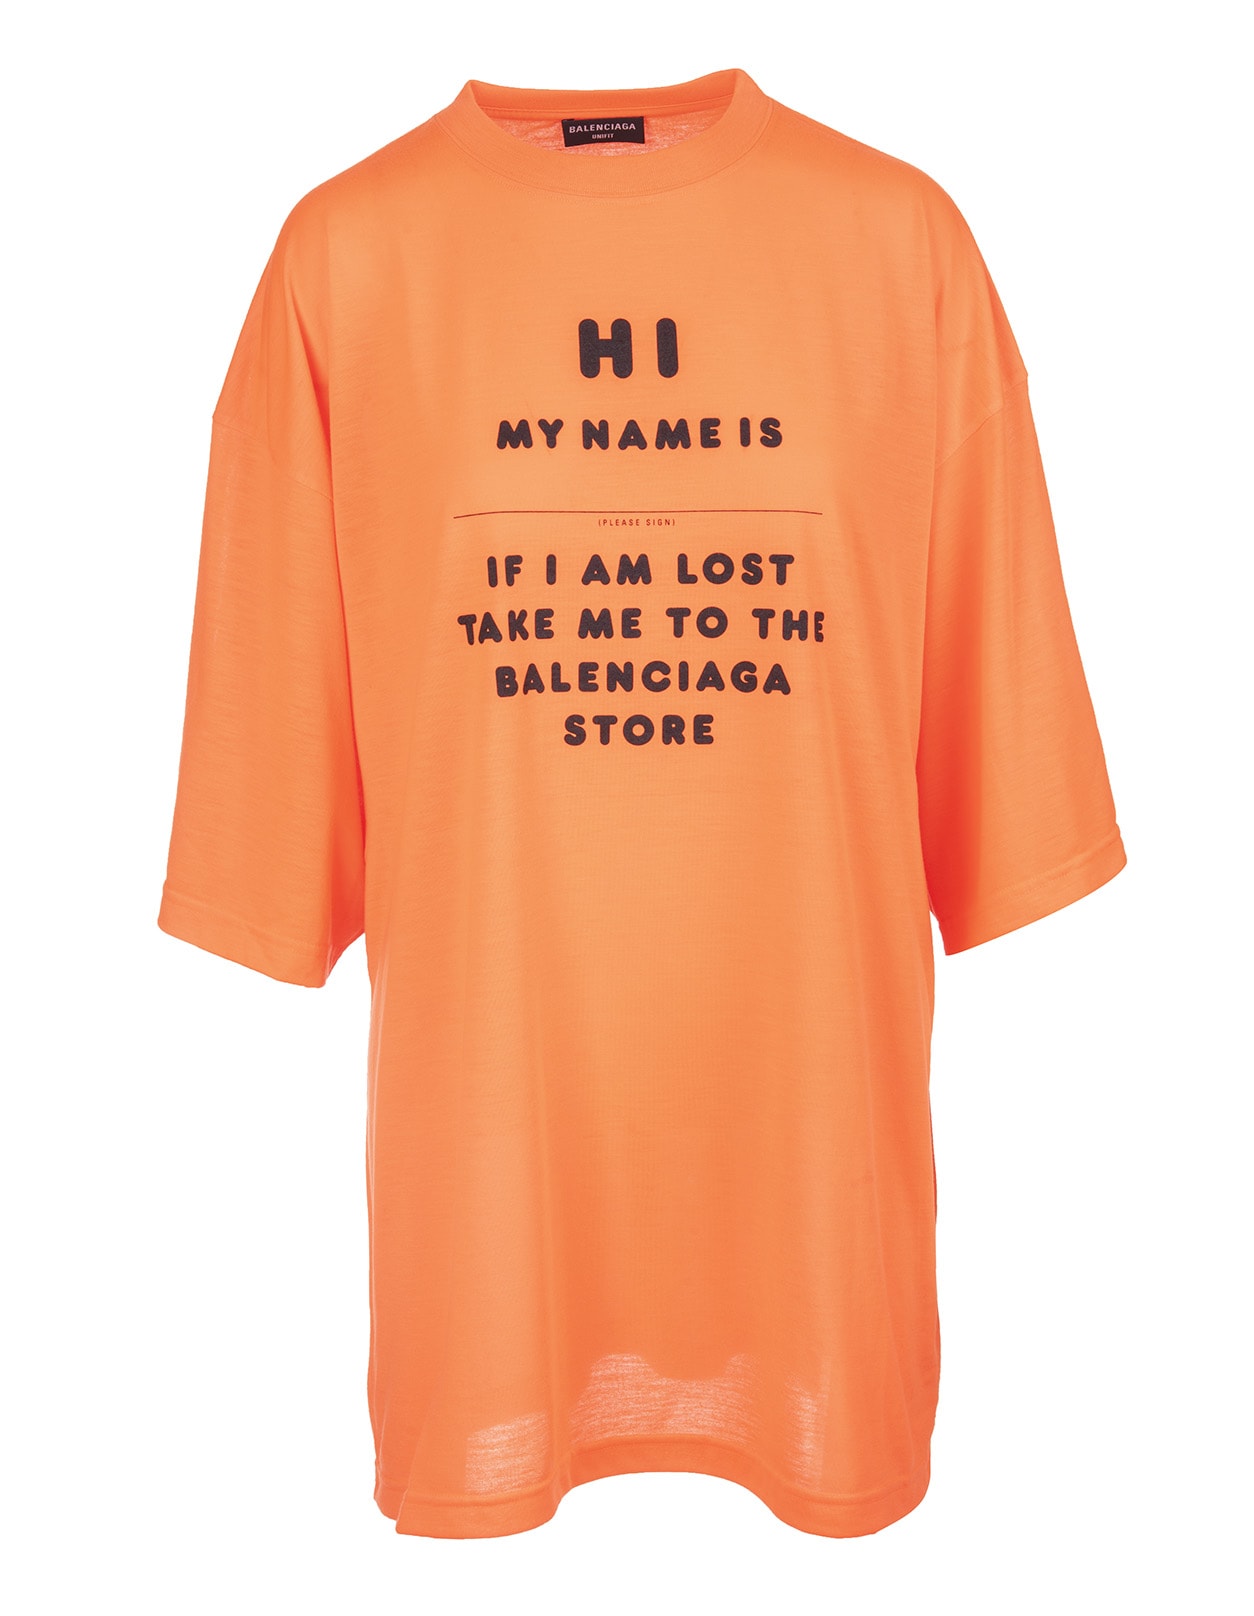 Balenciaga Unisex Orange Wide Fit Hi My Name Is T-shirt